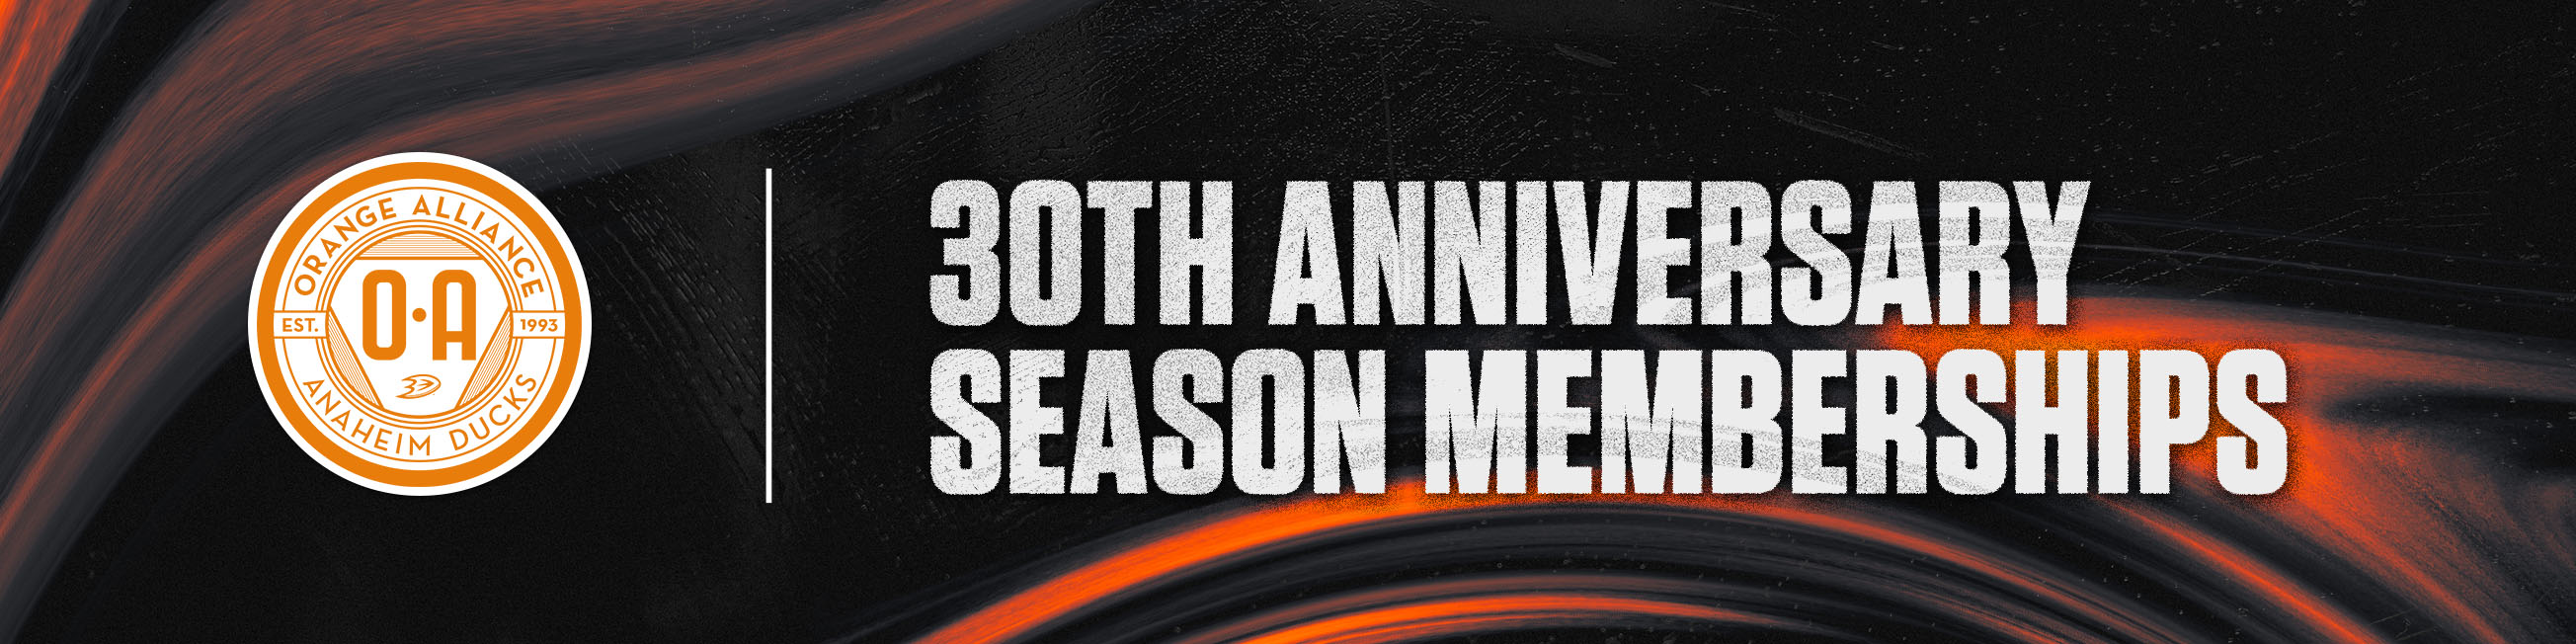 Orange Alliance 30th anniversary season memberships header image